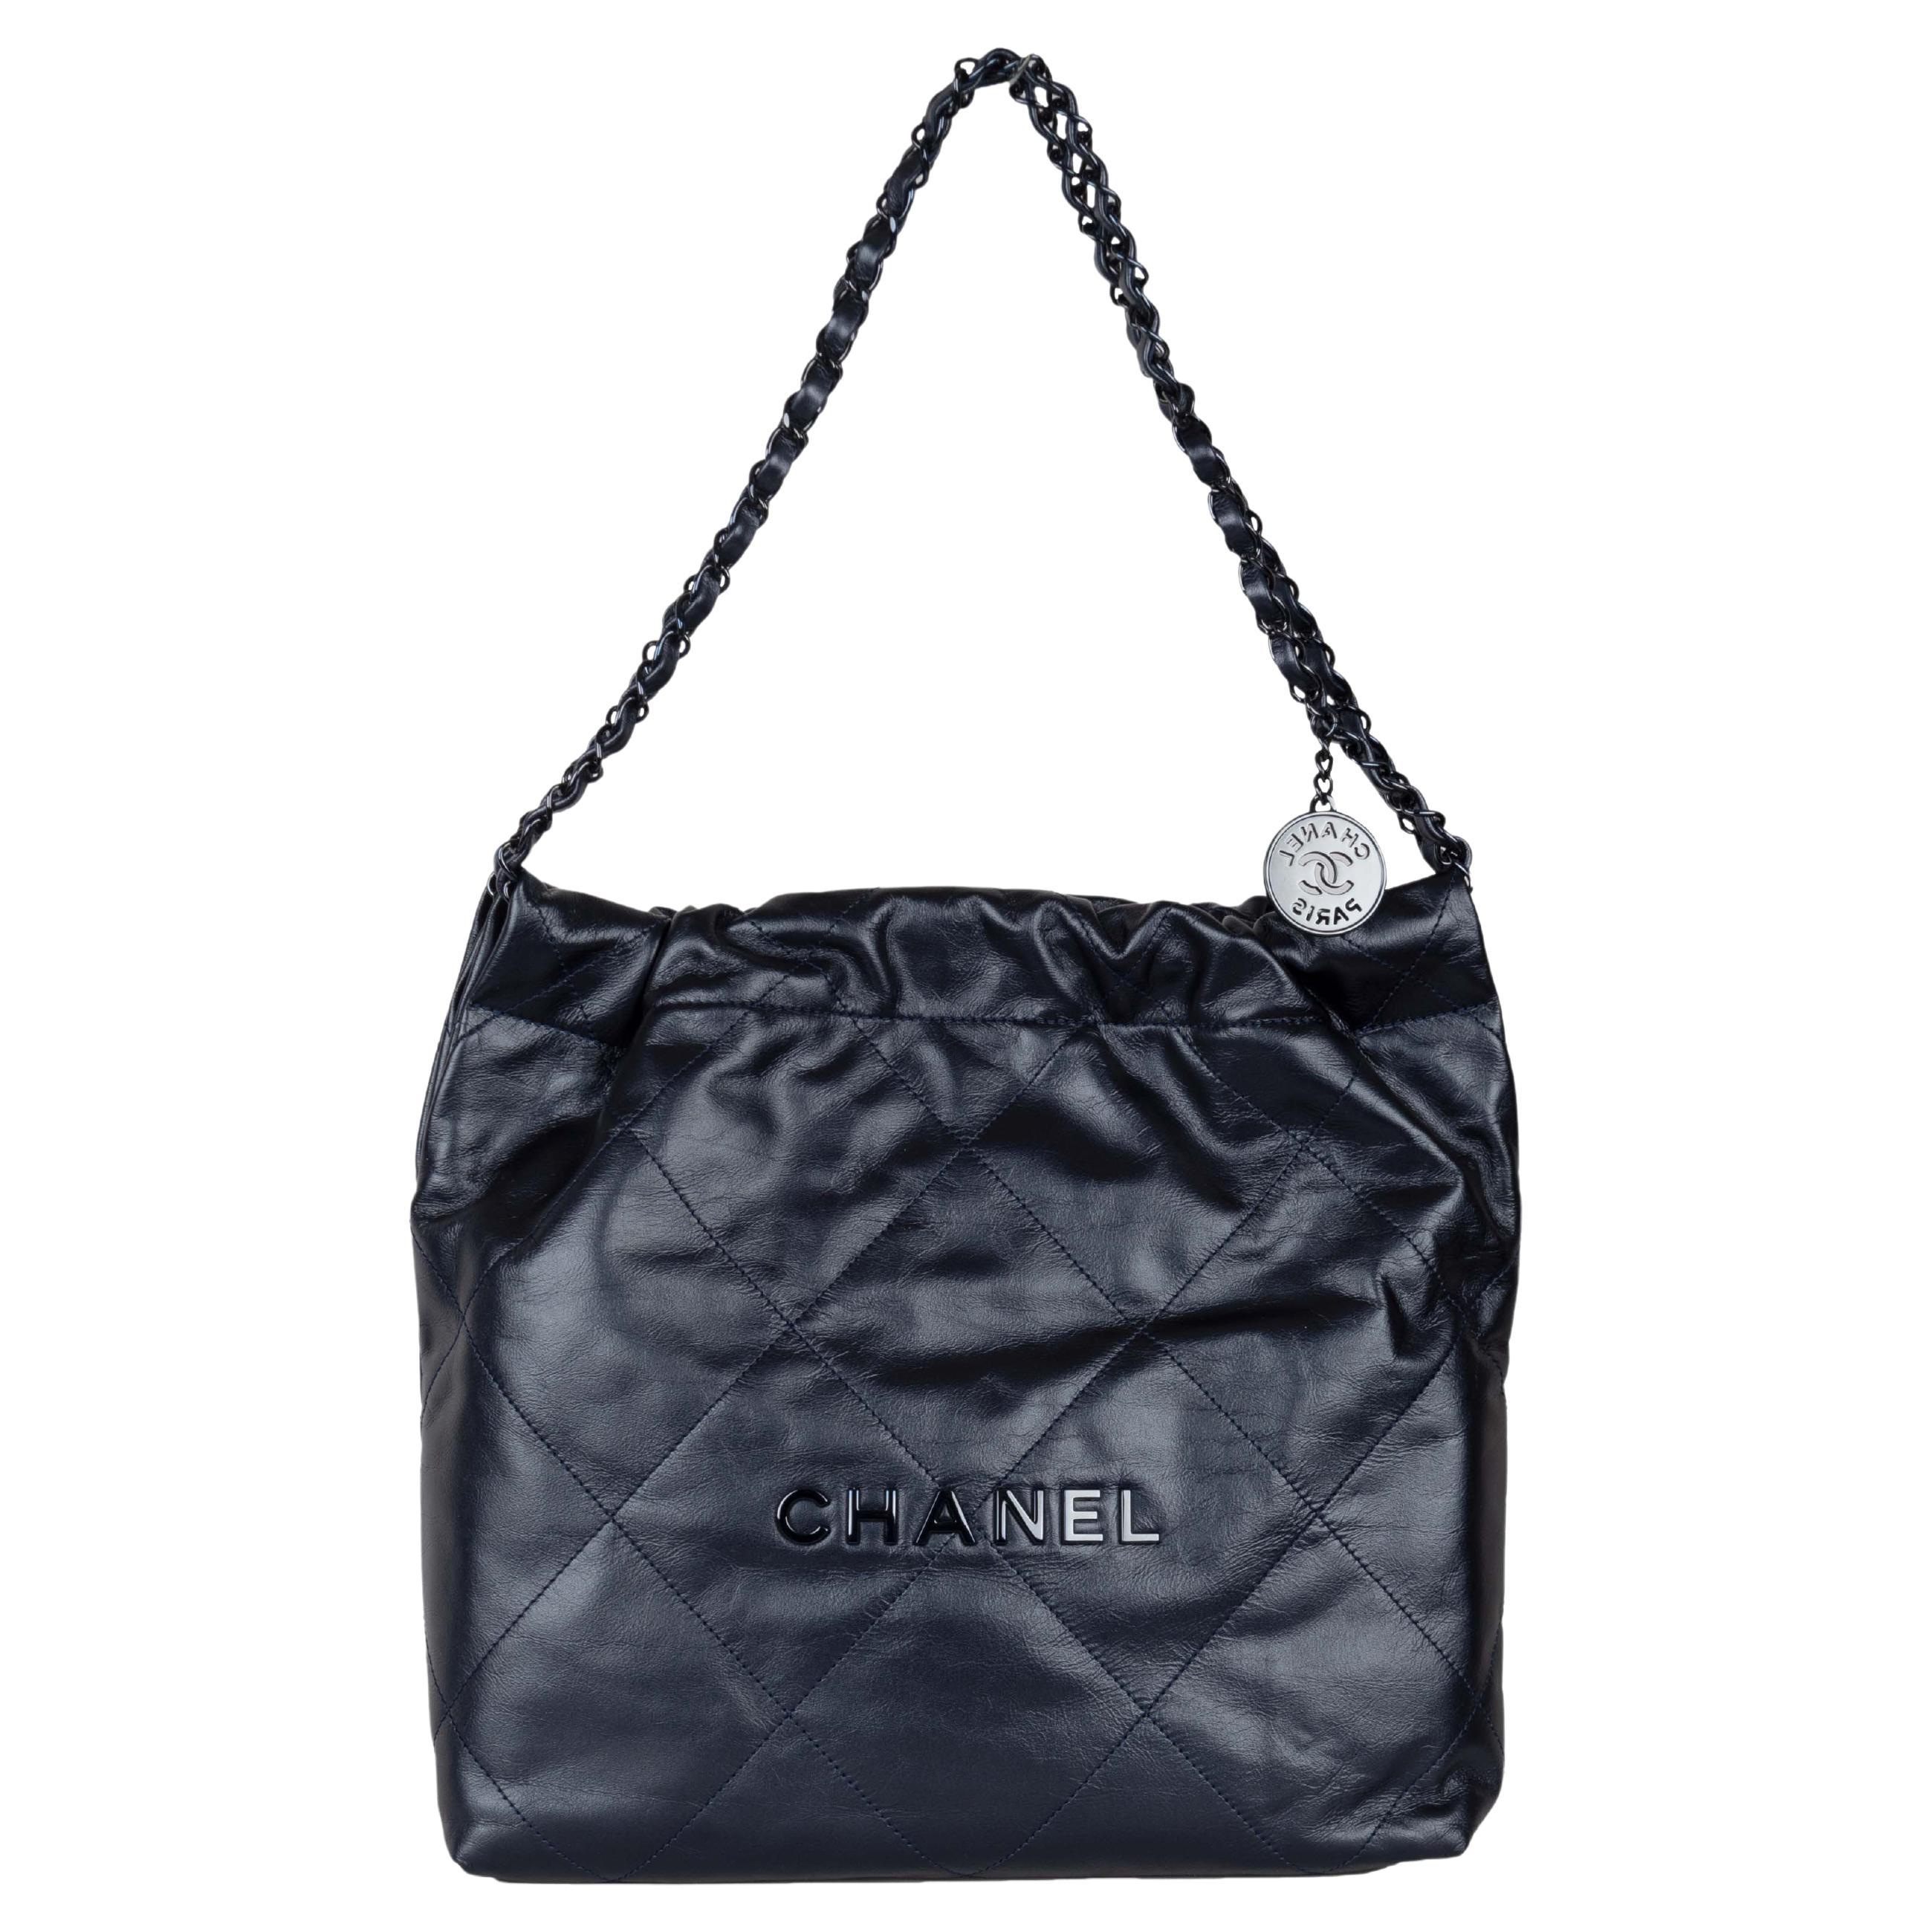 CHANEL Lambskin Stitched Duffle Travel Bag Black 1232644